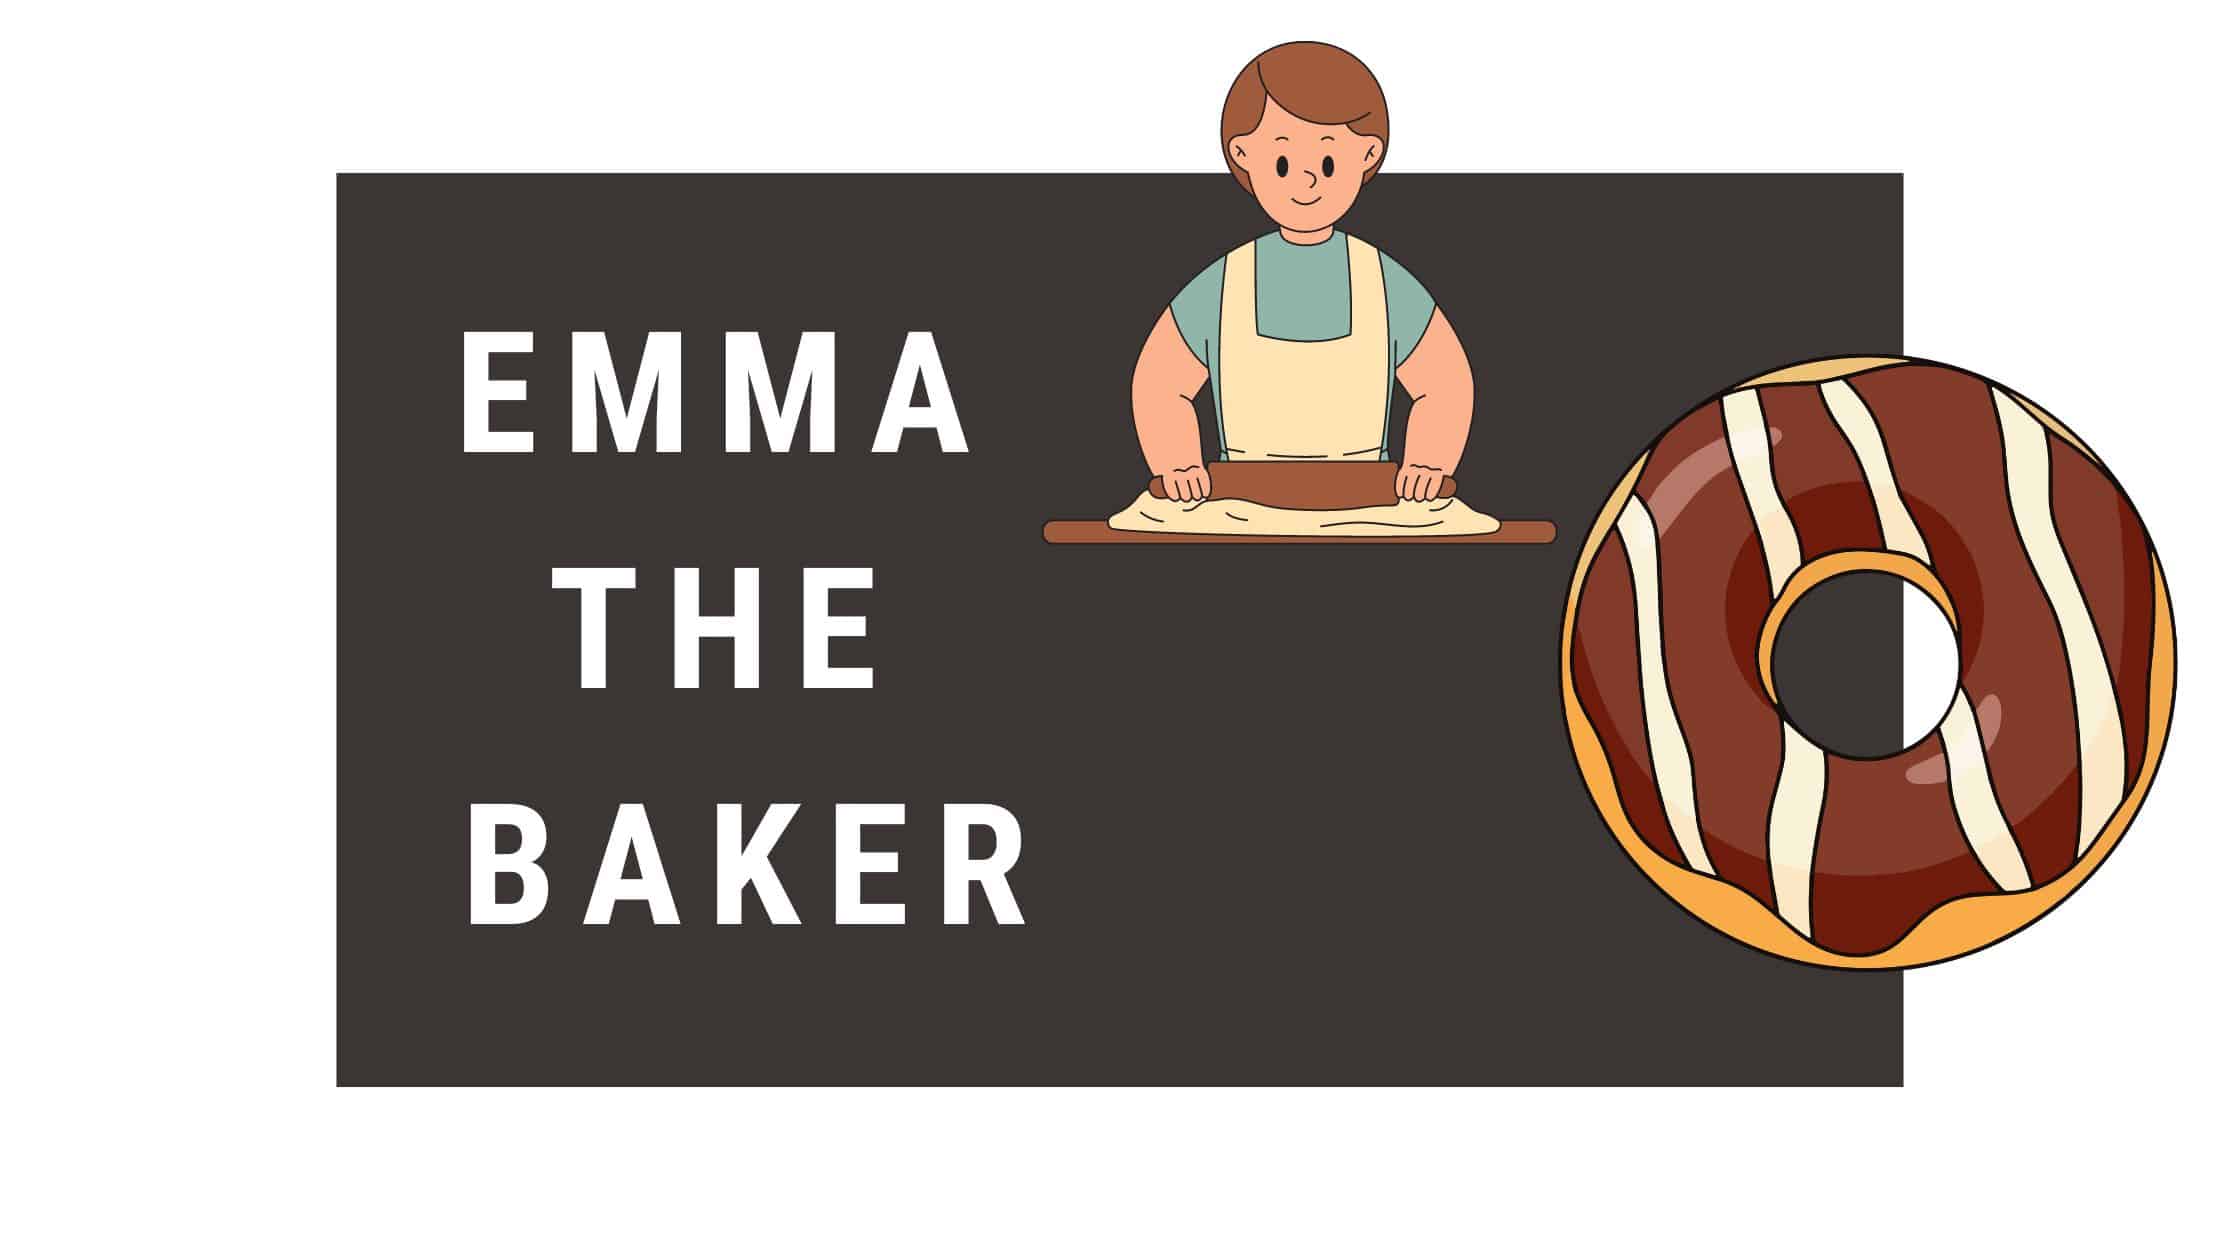 Emma the Baker